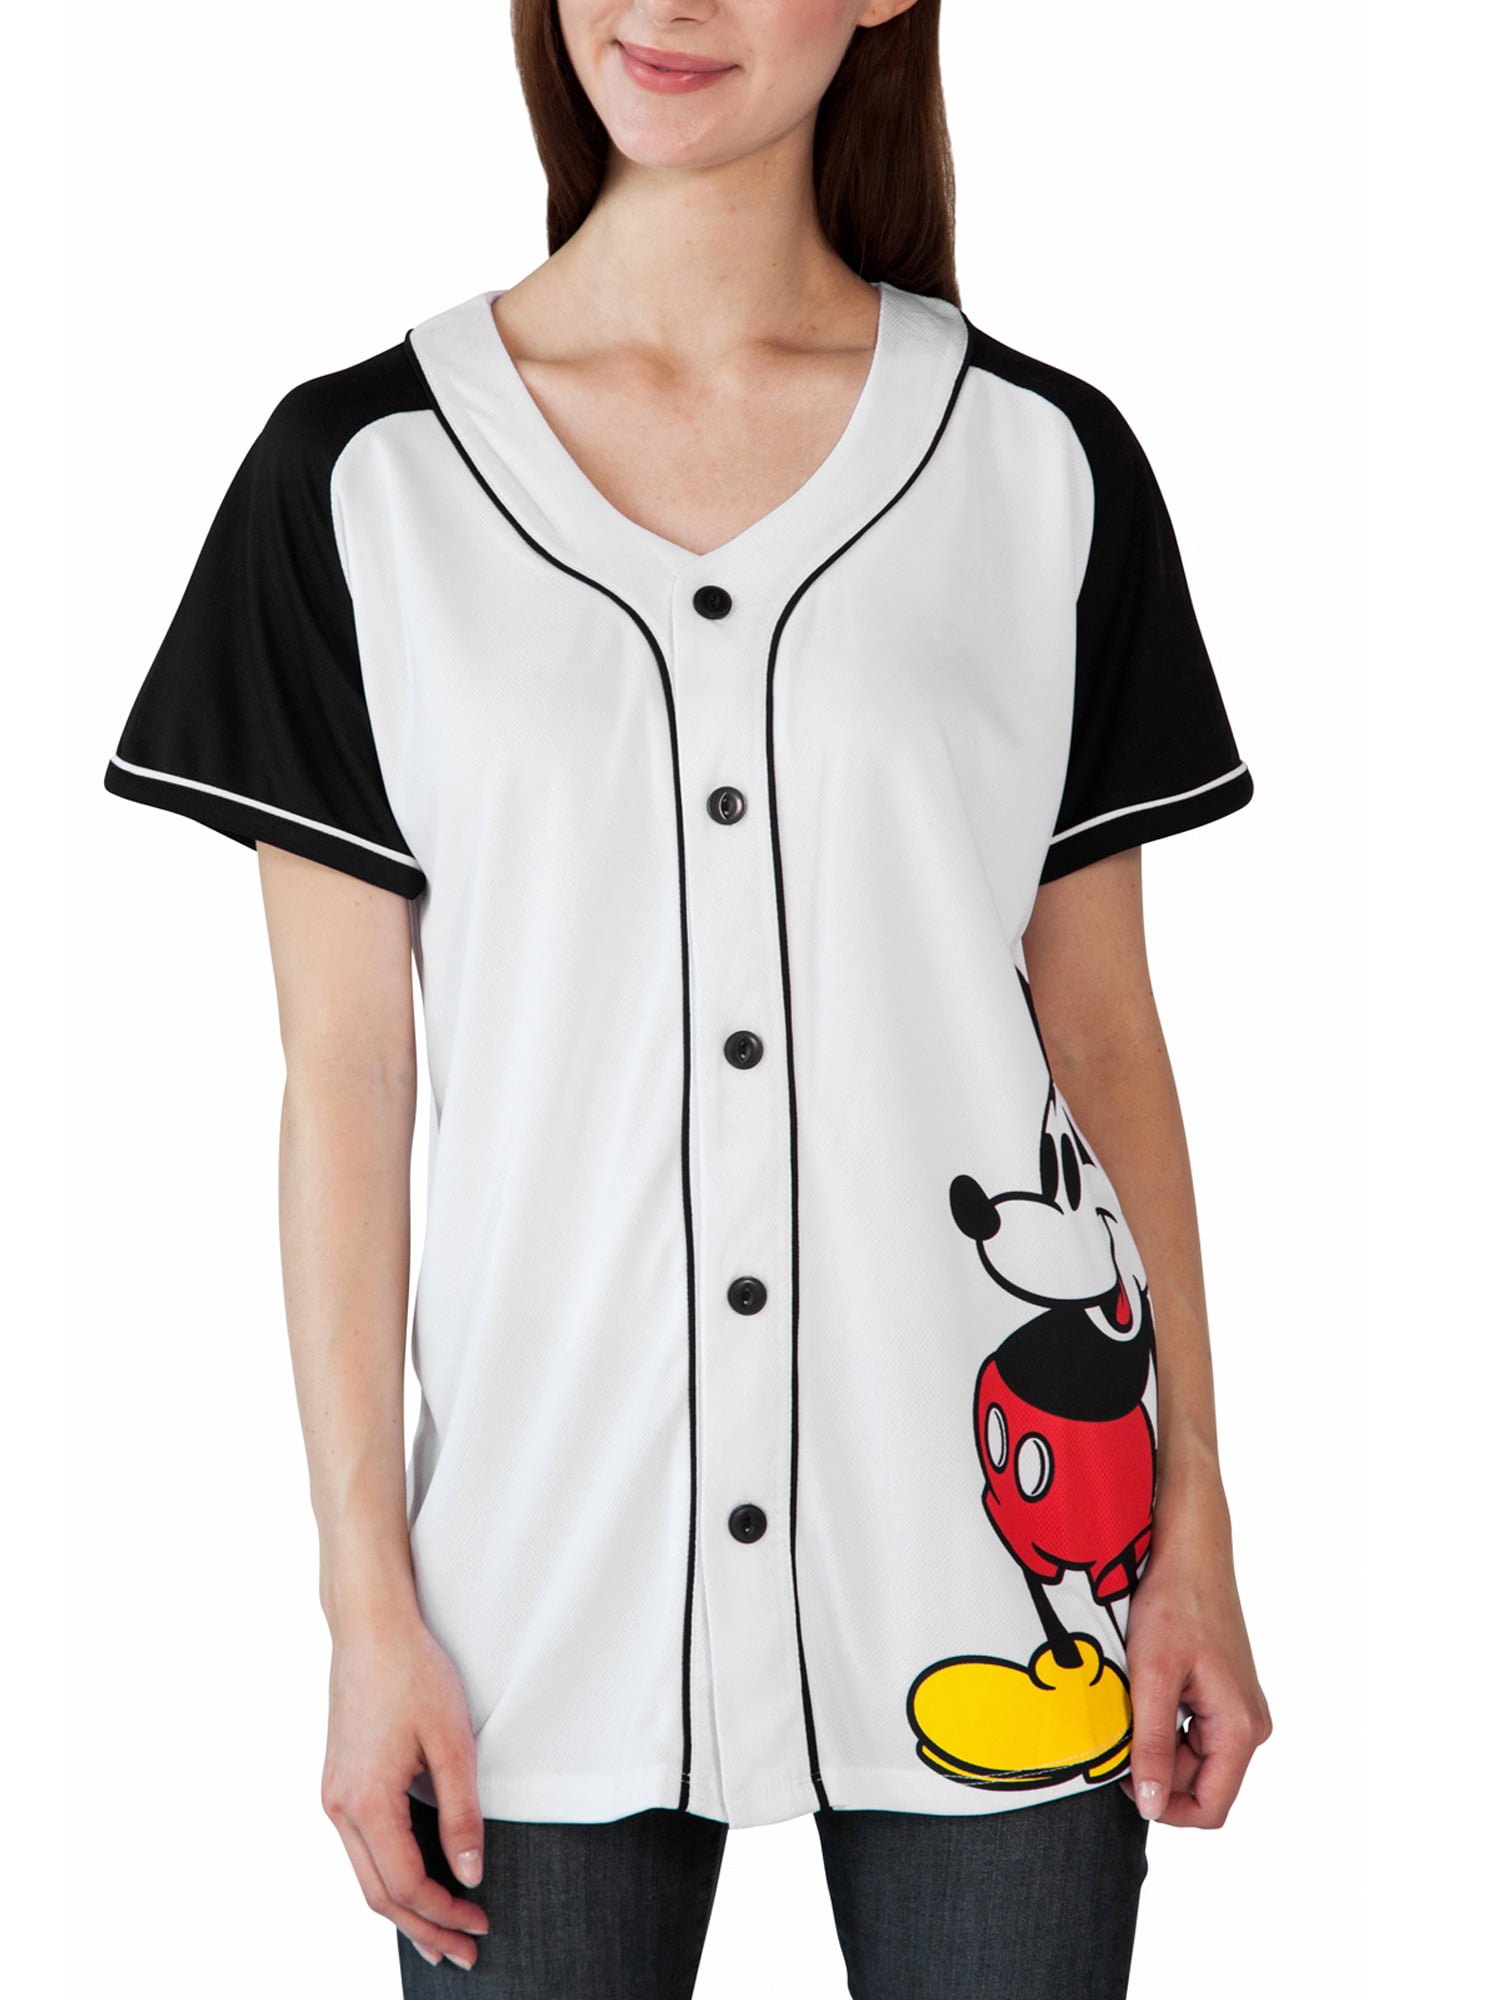 mens mickey mouse baseball jersey